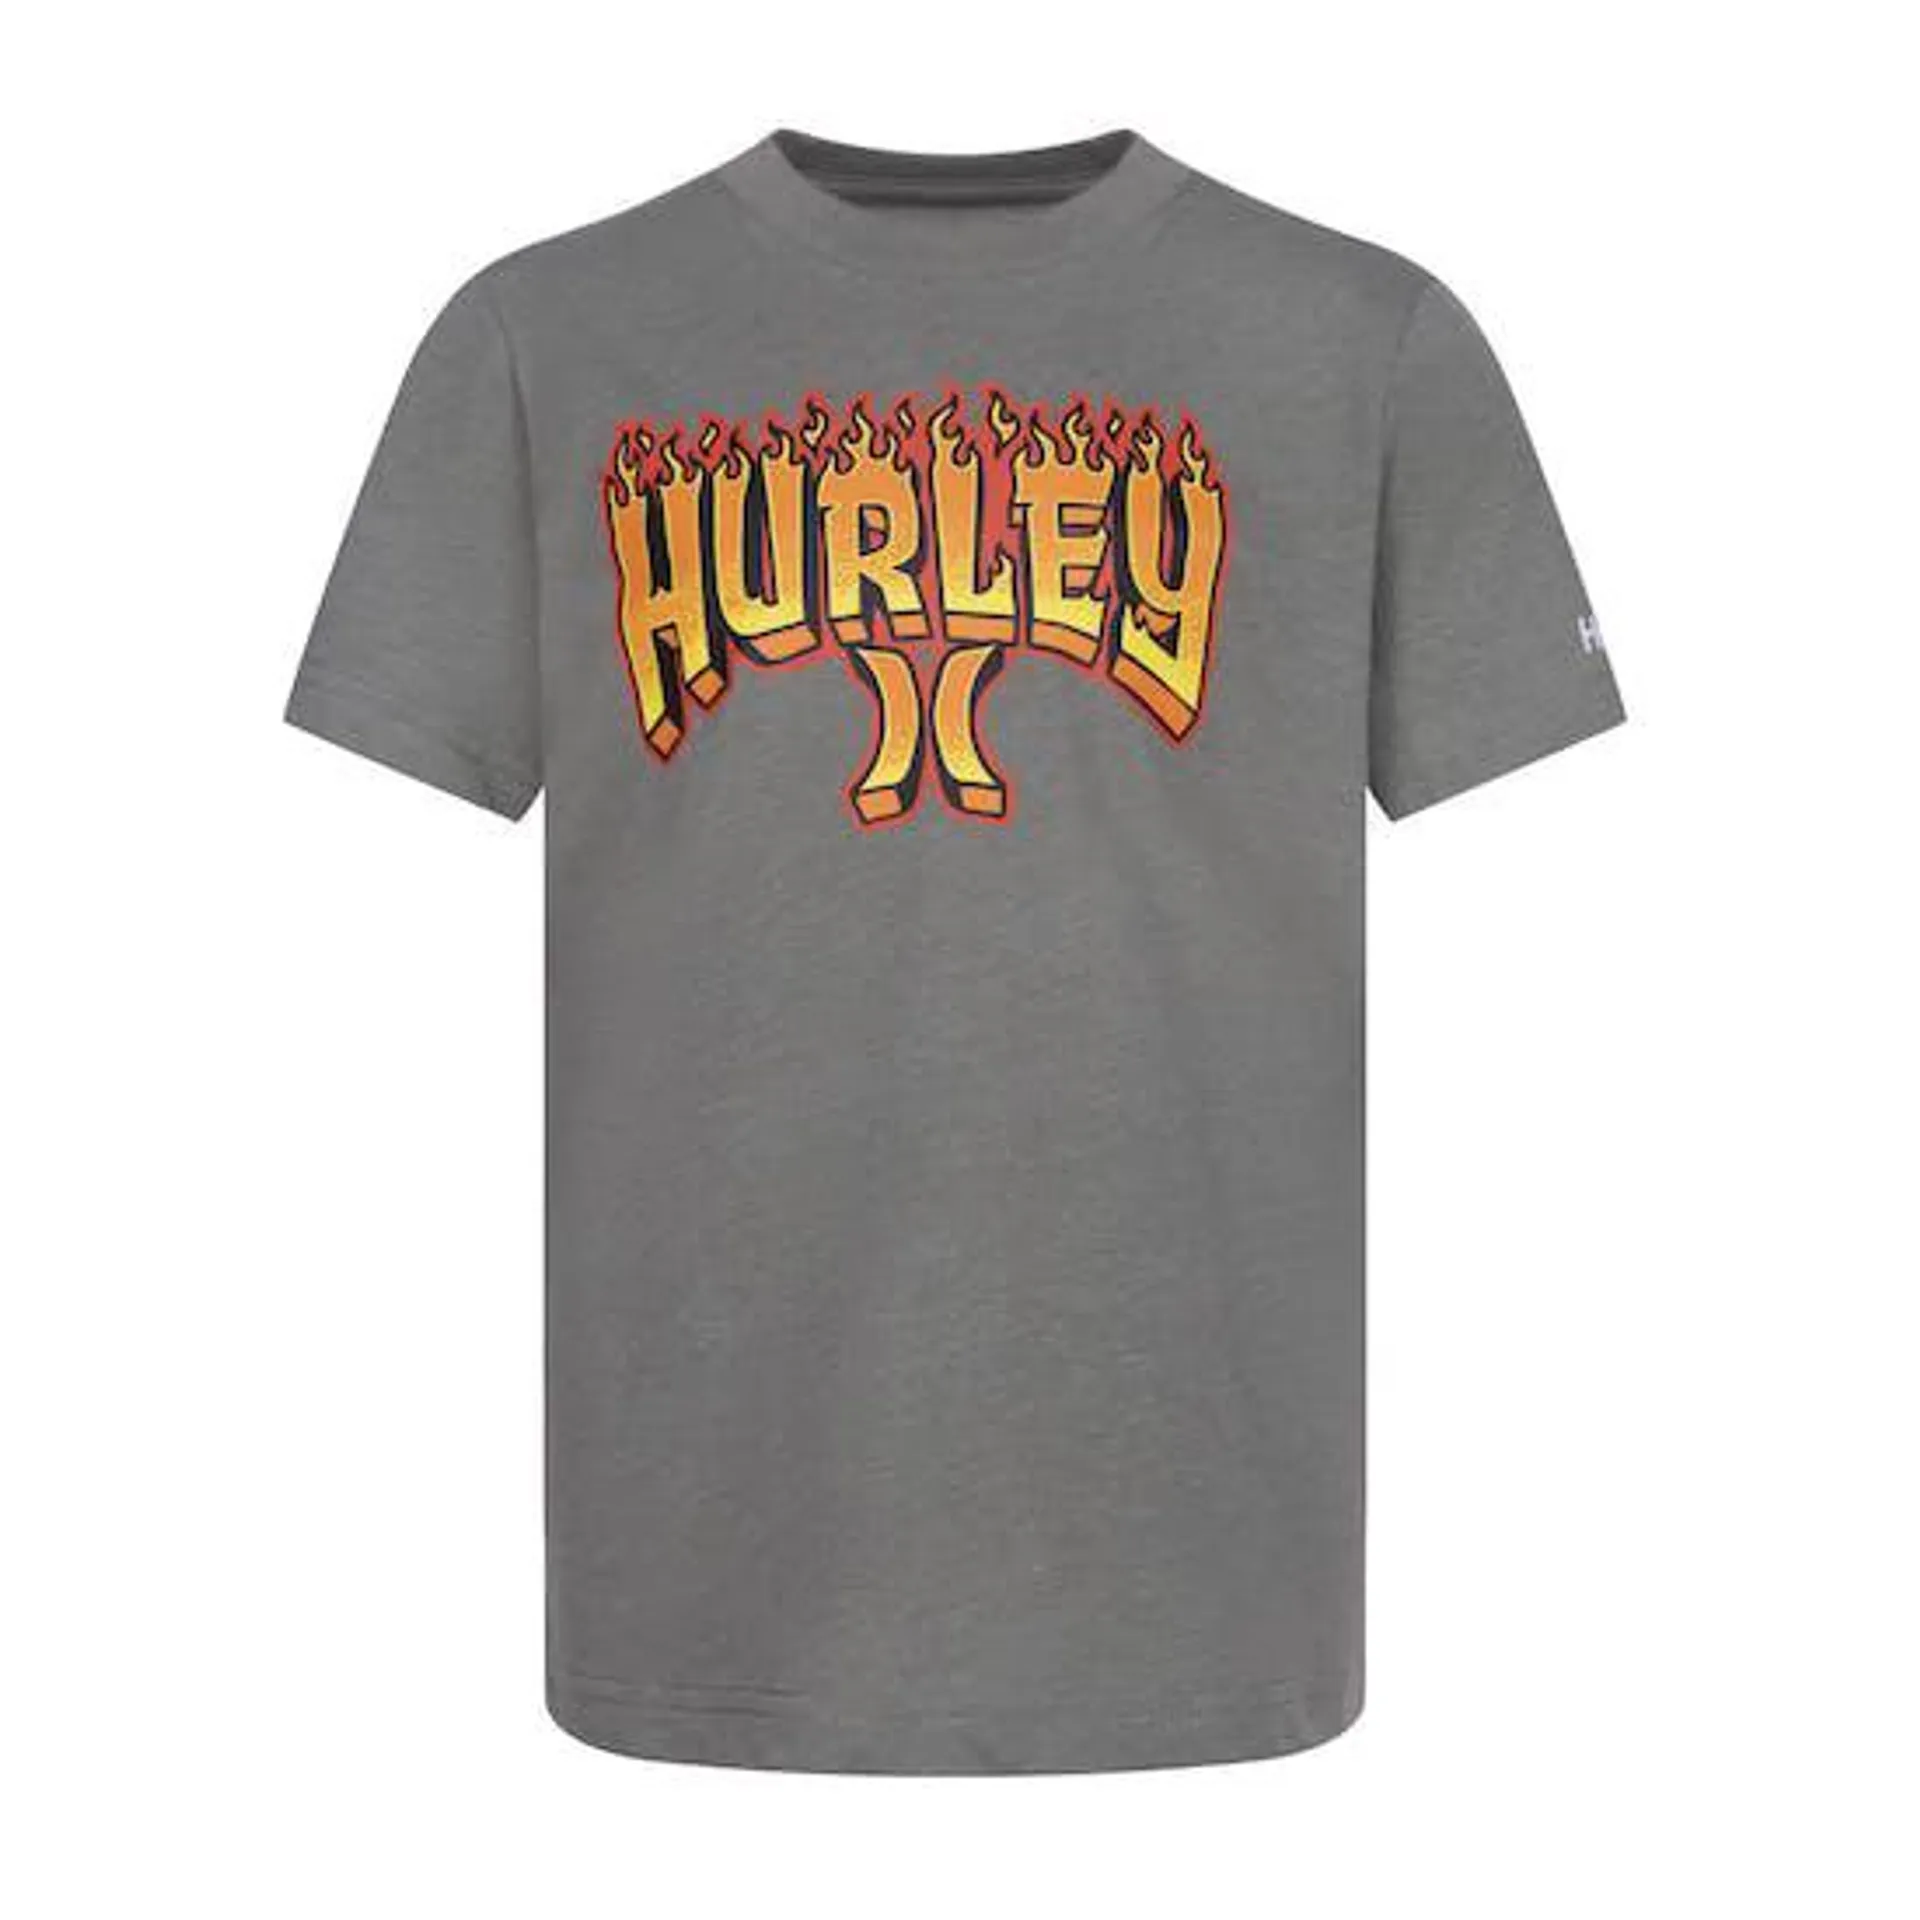 Hurley Hrlb Heater Boys Short Sleeve T-Shirt